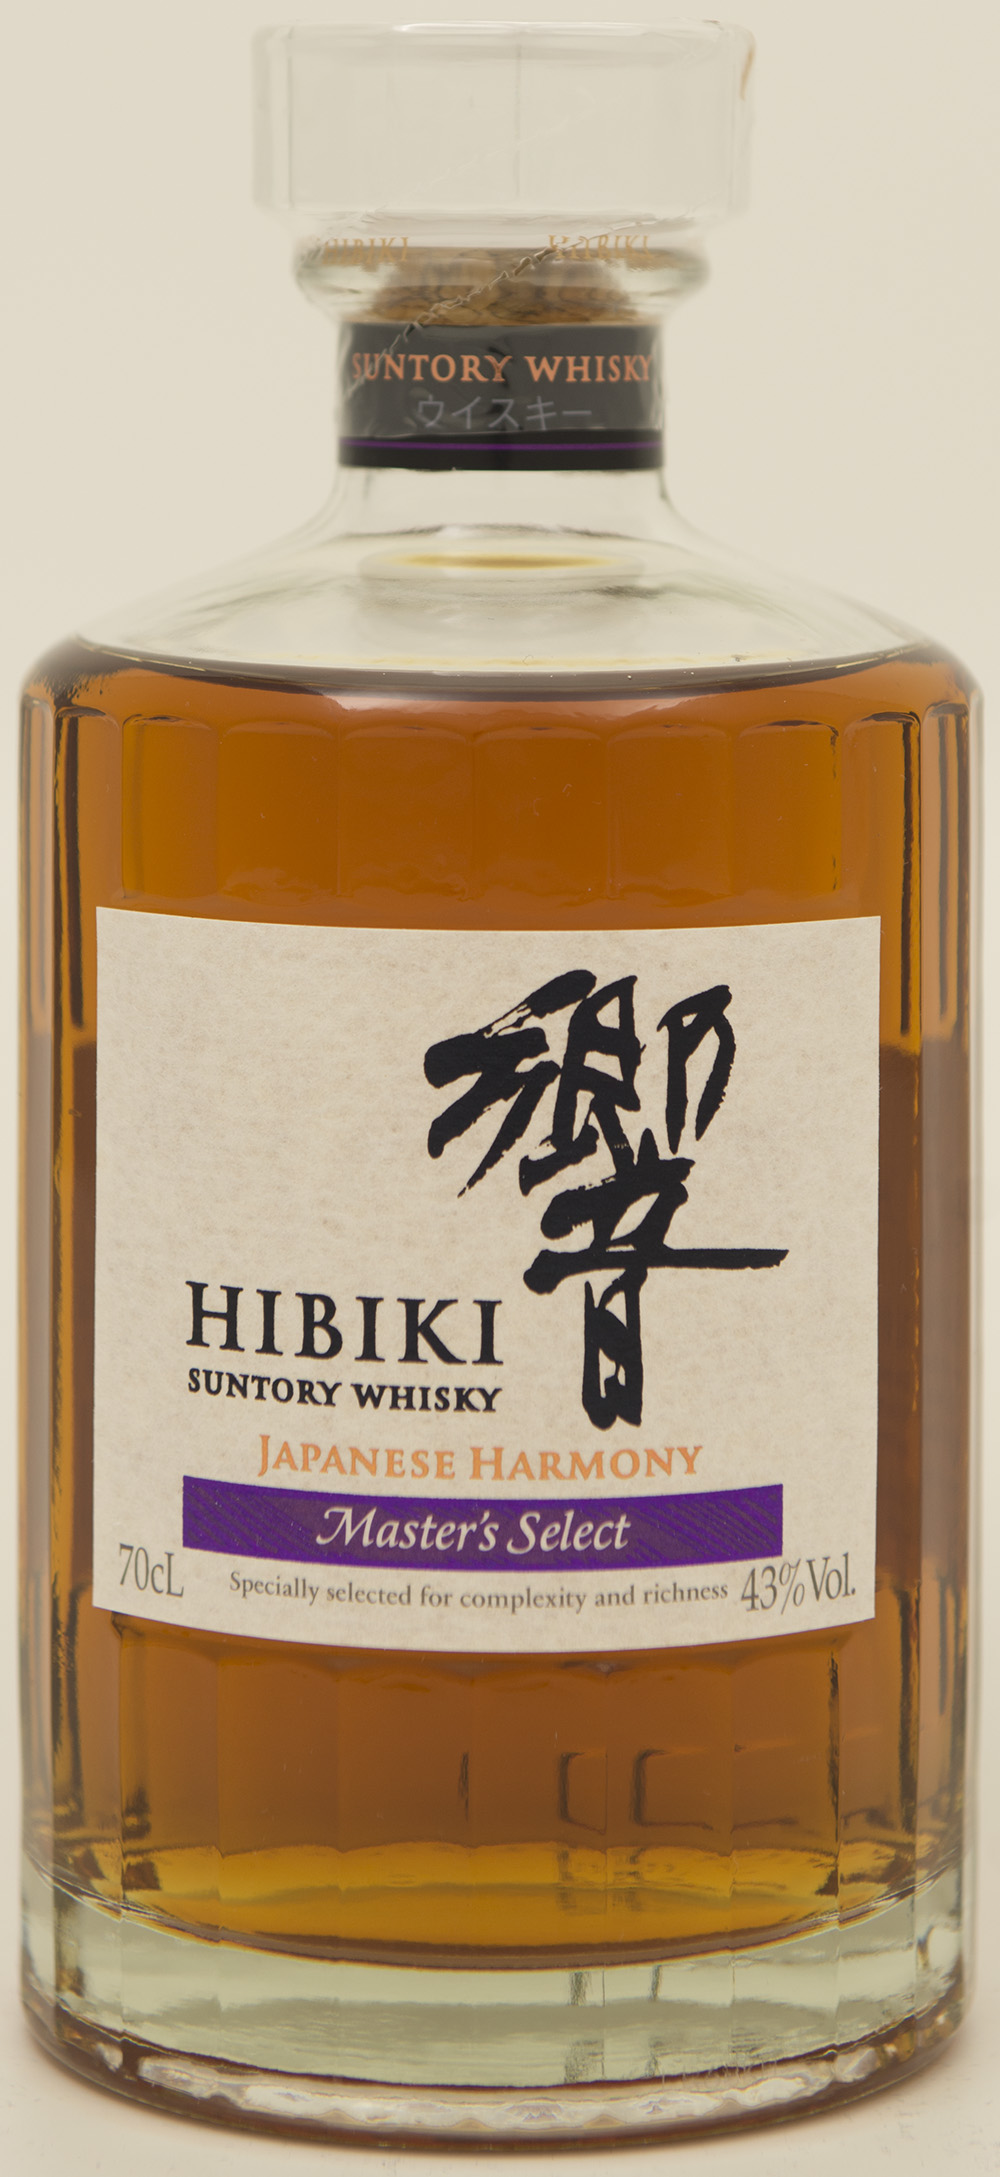 Billede: DSC_3739 - Hibiki Master's Select - bottle front.jpg